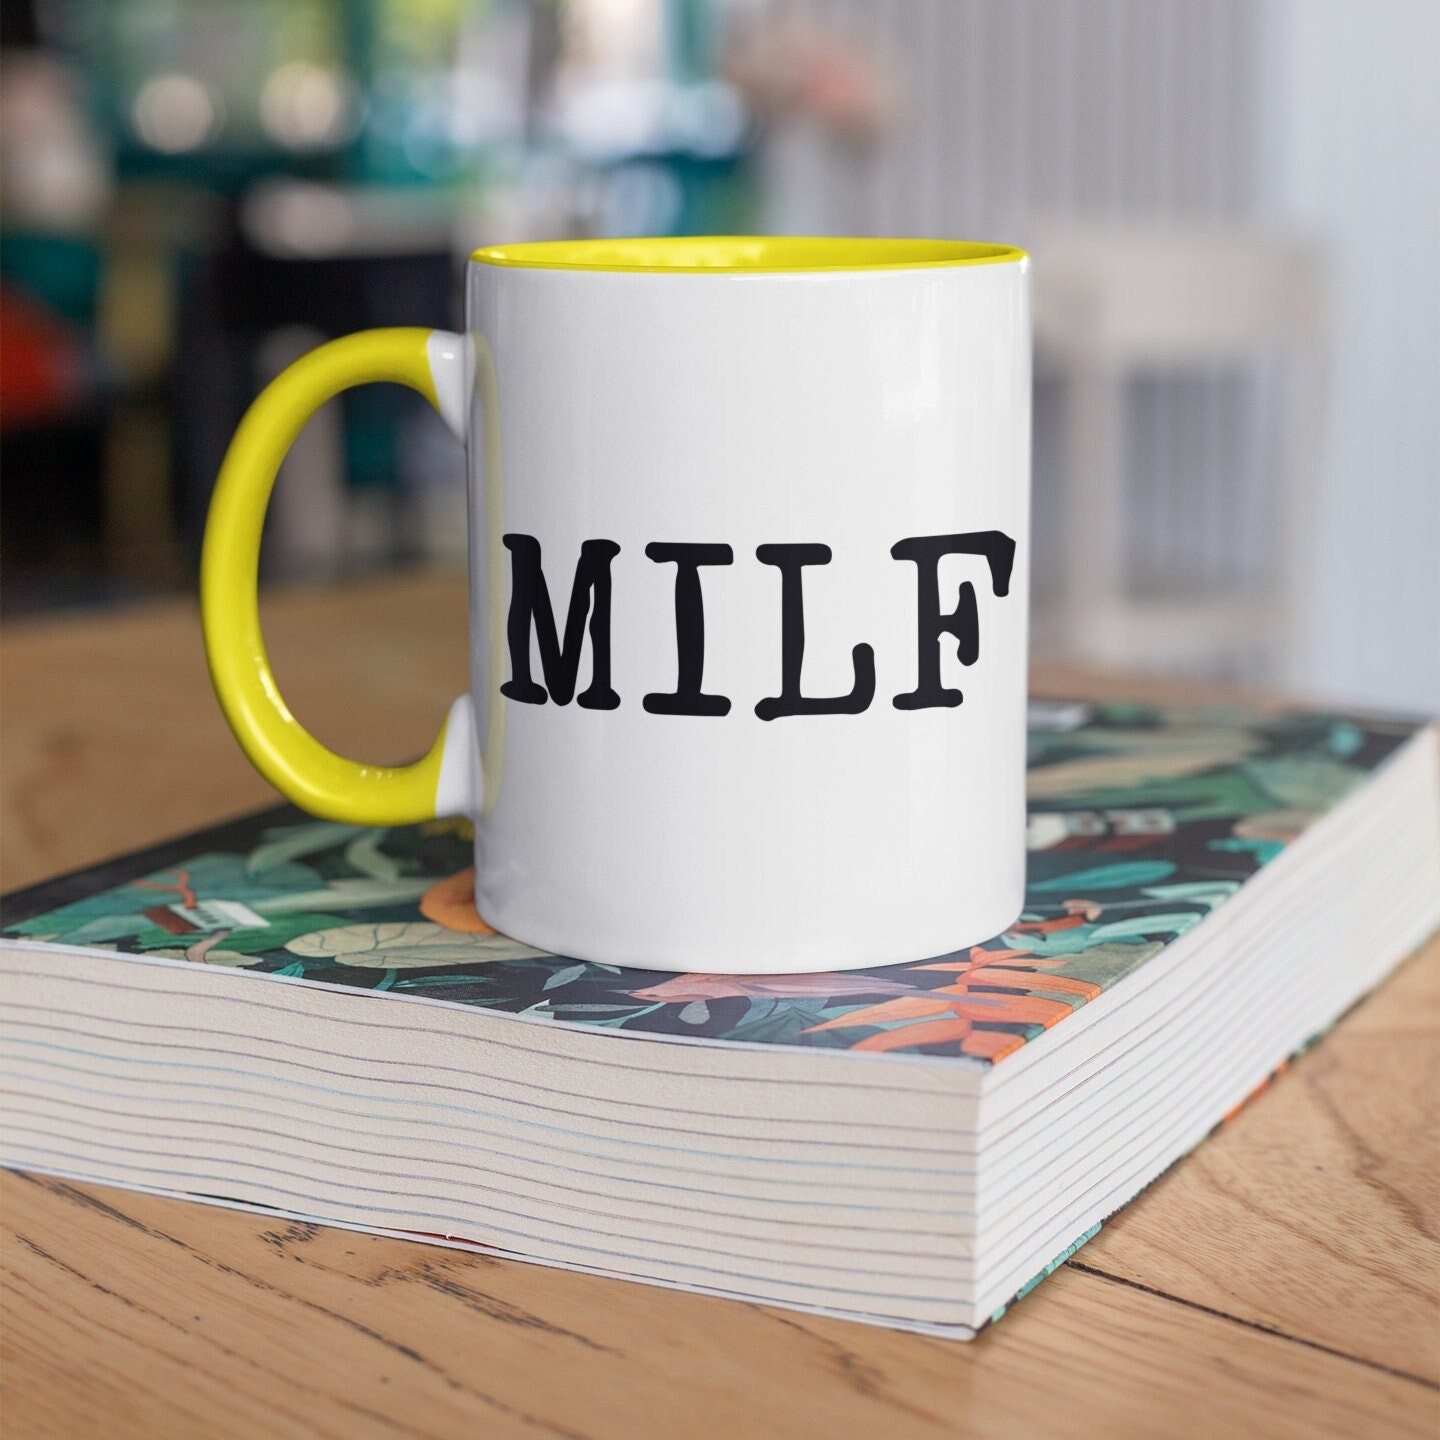 Art-O-Rama - Dunder Mifflin Paper Company Inc from The Office Mug